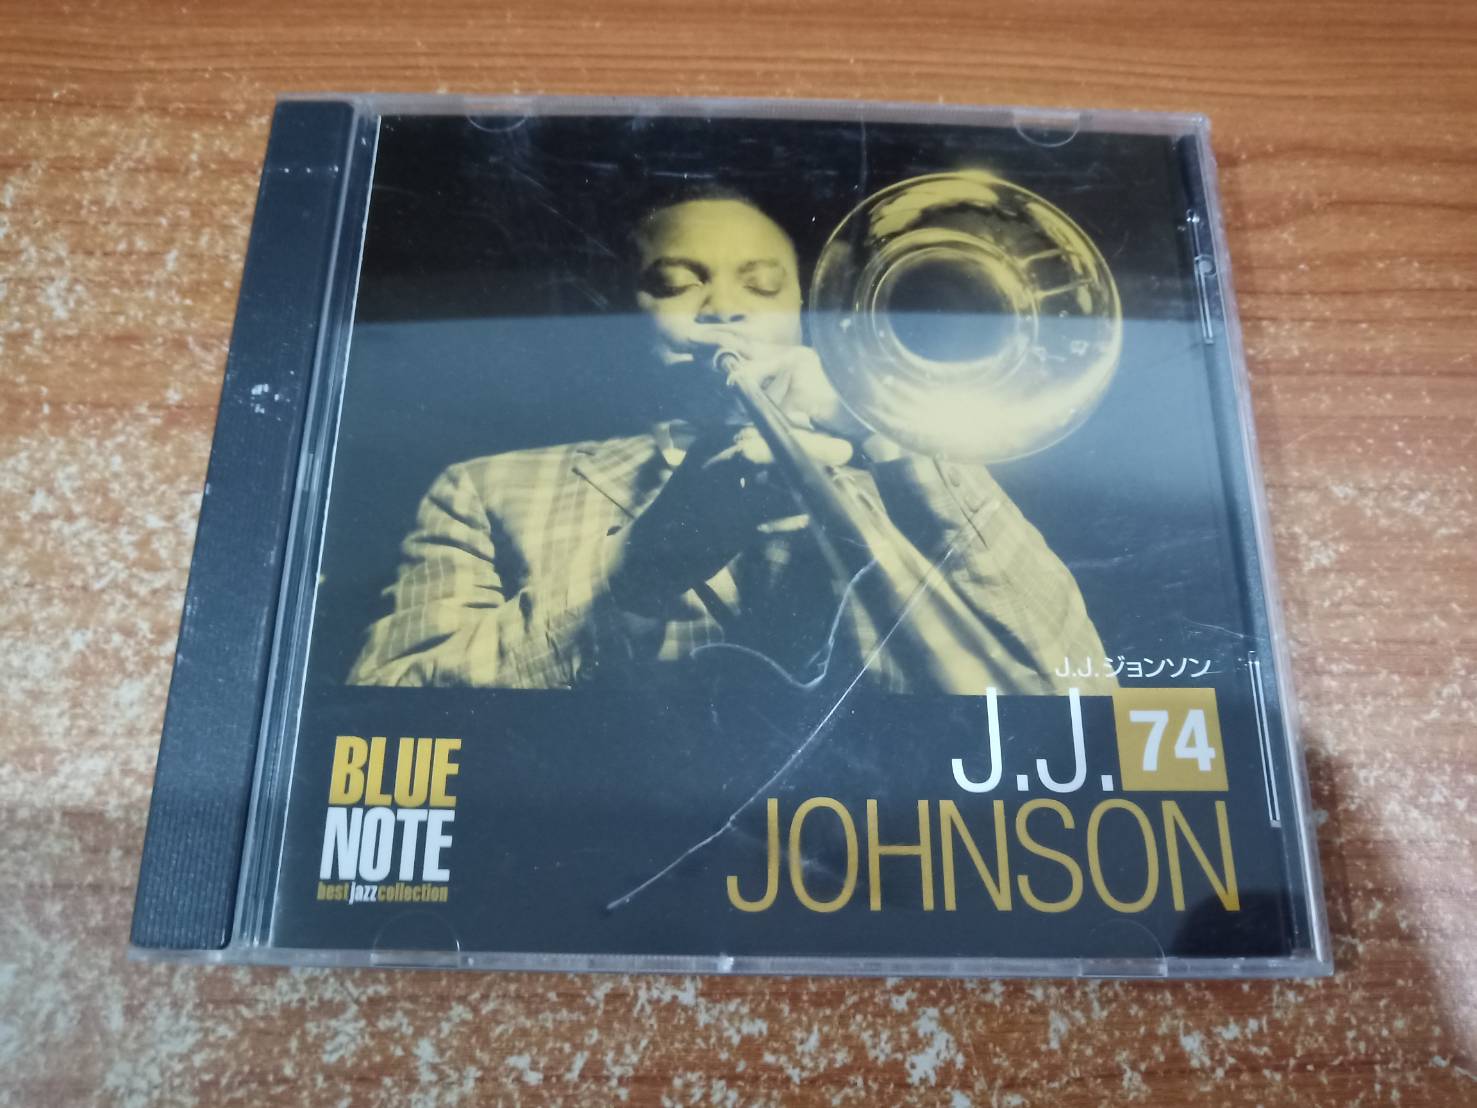 CD MUSIC ซีดี เพลง BLUE NOTE best jazz collection ***โปรดดูภาพและอ่านรายละเอียดสินค้าก่อนทำการสั่งซื้อ***